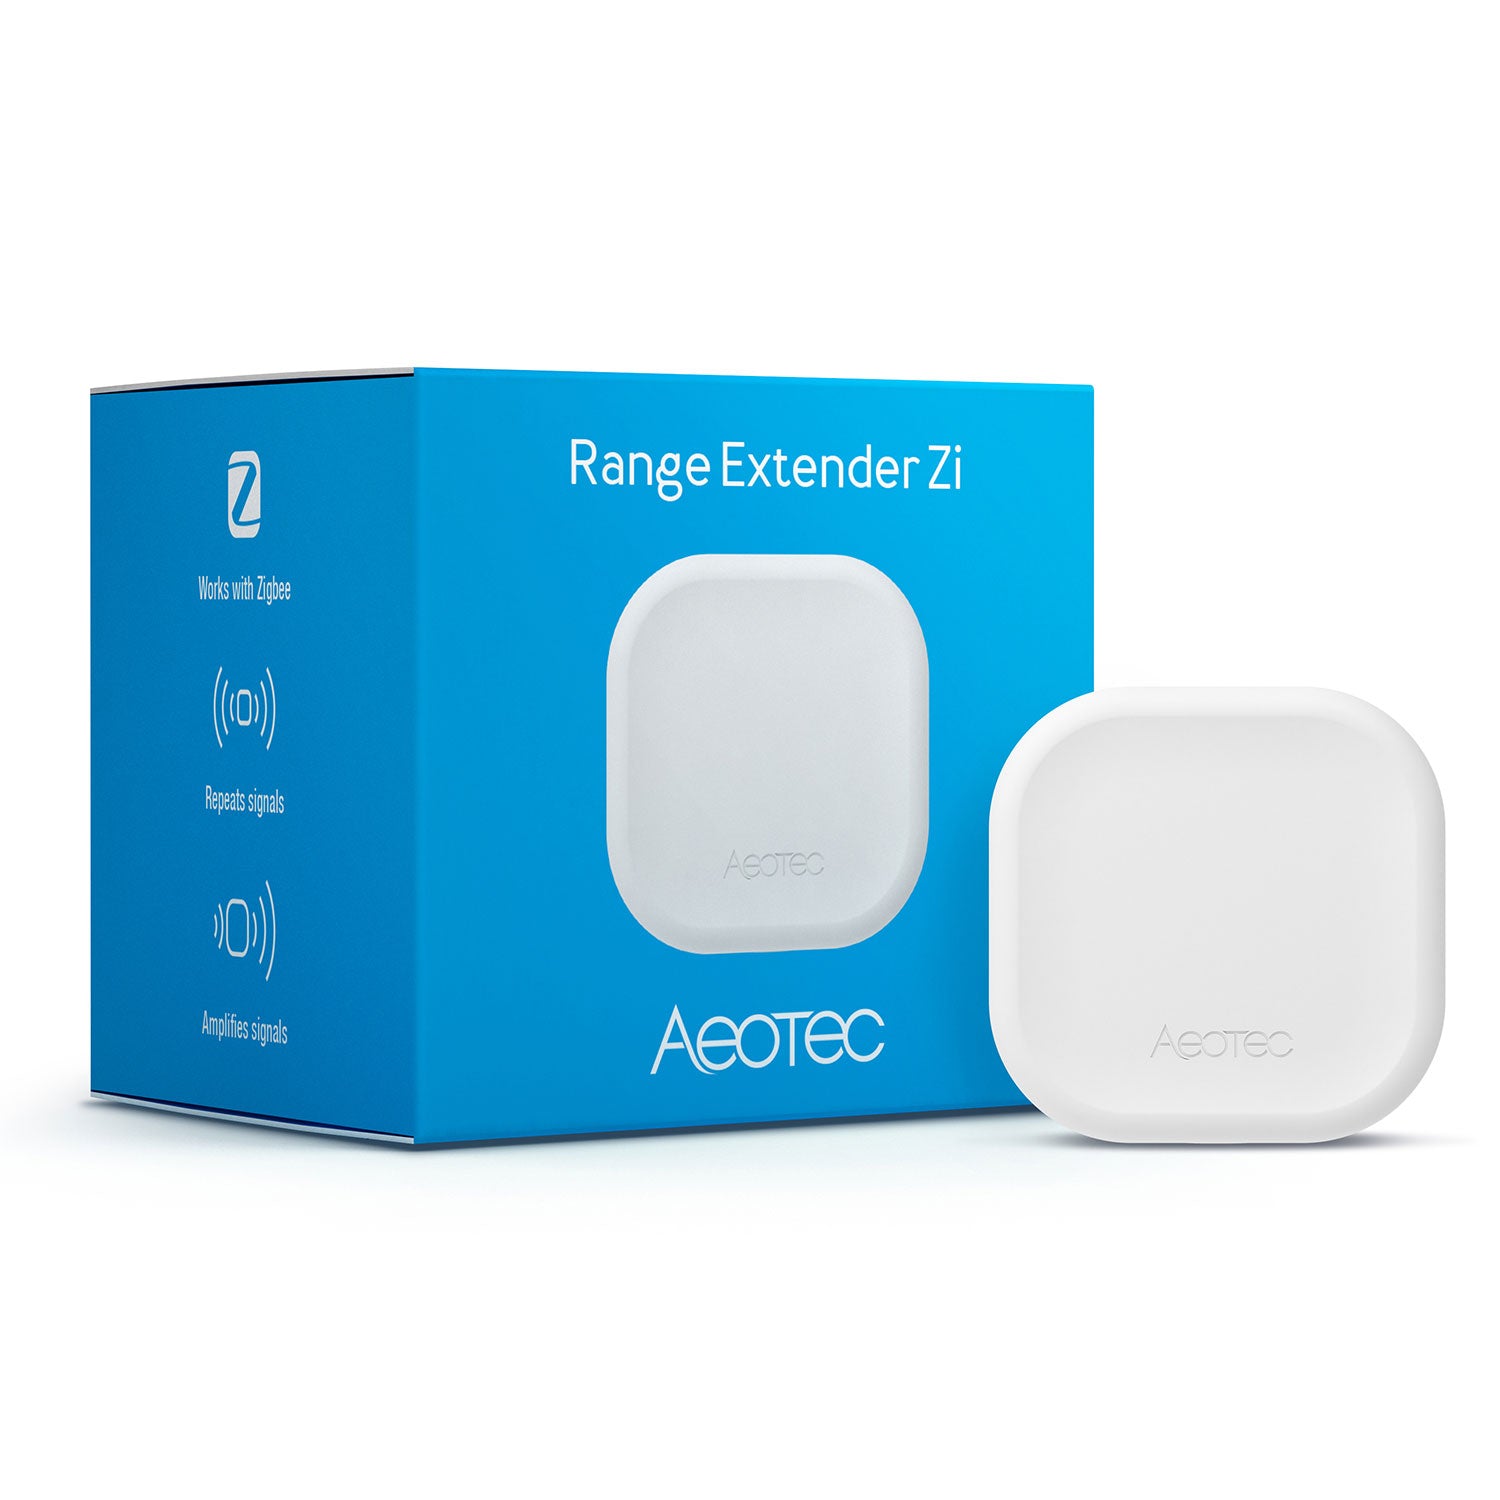 Aeotec Range Extender Zi (Zigbee) packaging